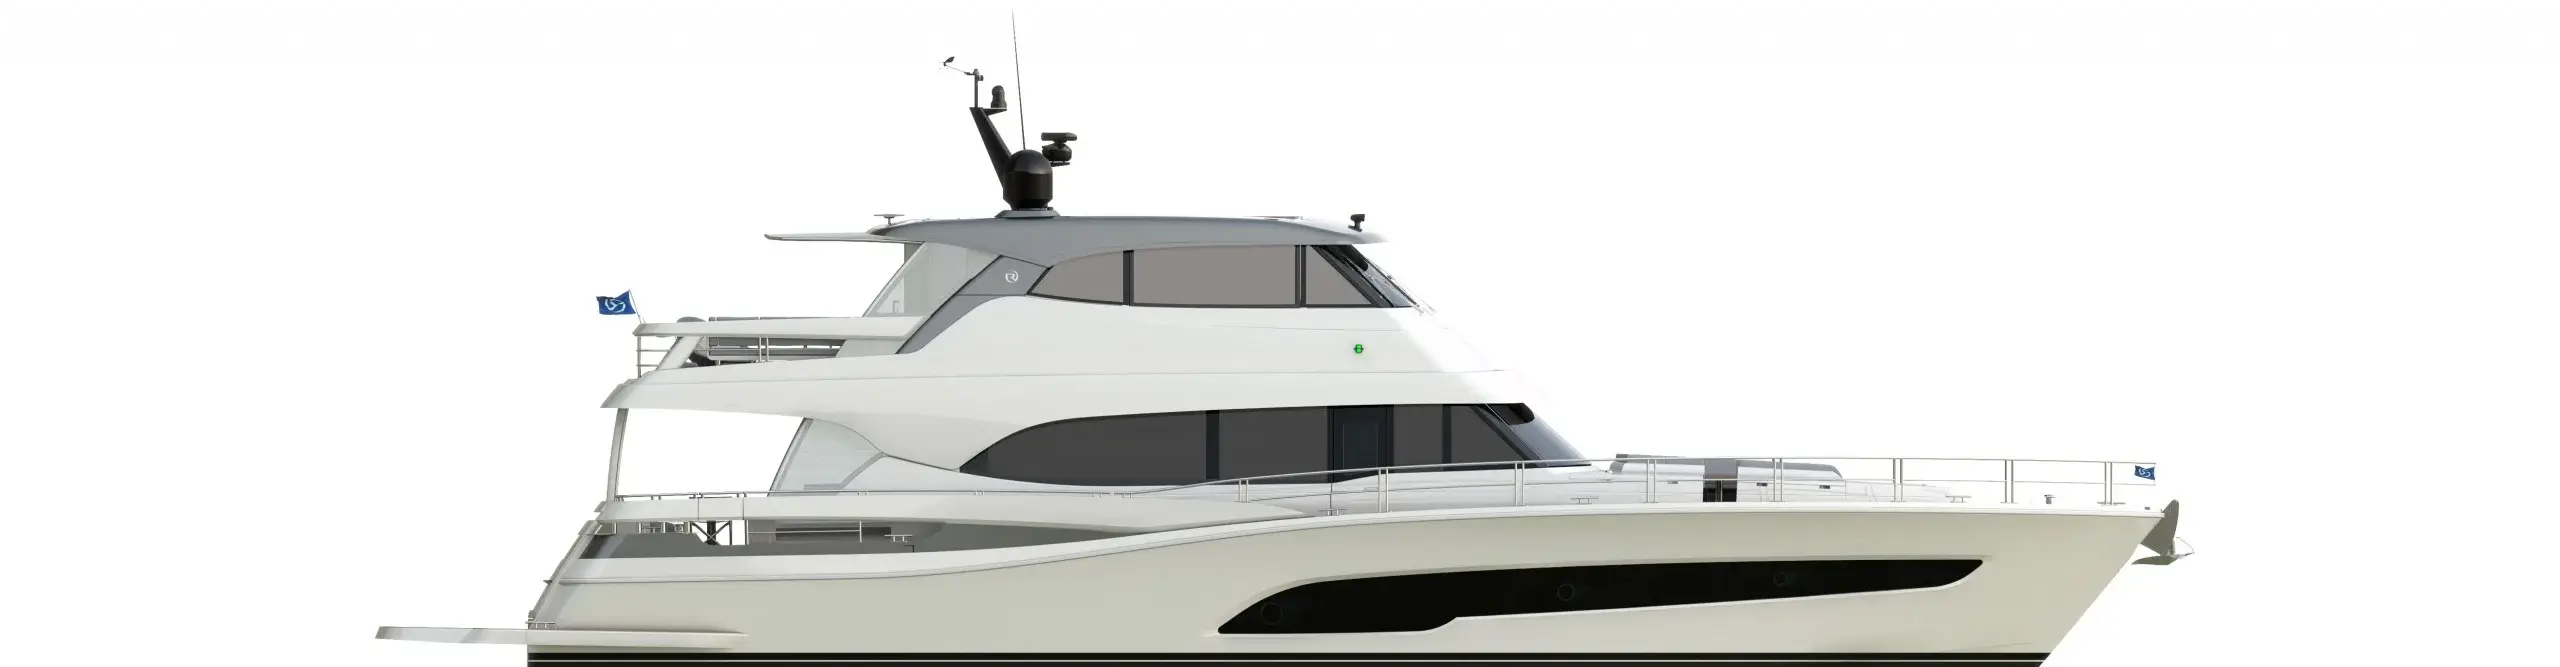 Riviera 78 Motor Yacht Profile